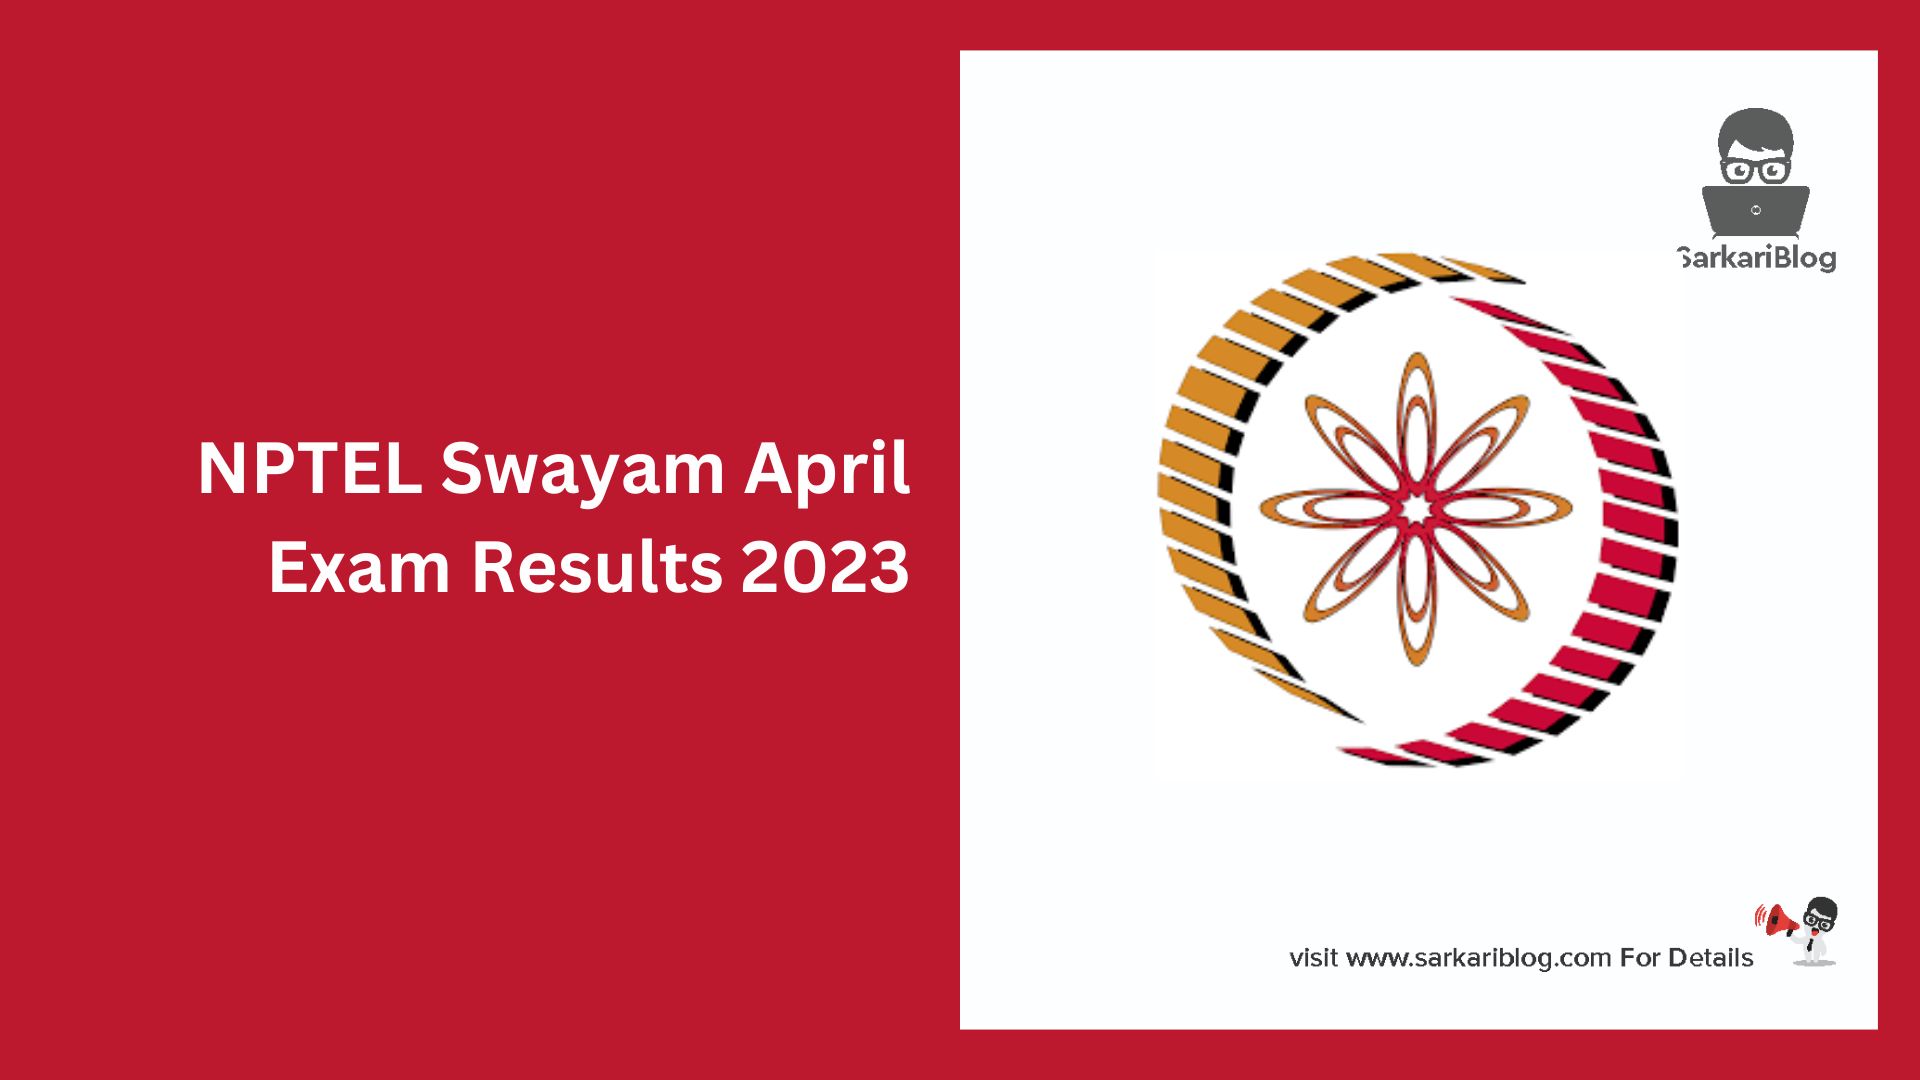 NPTEL Swayam April Exam Results 2023